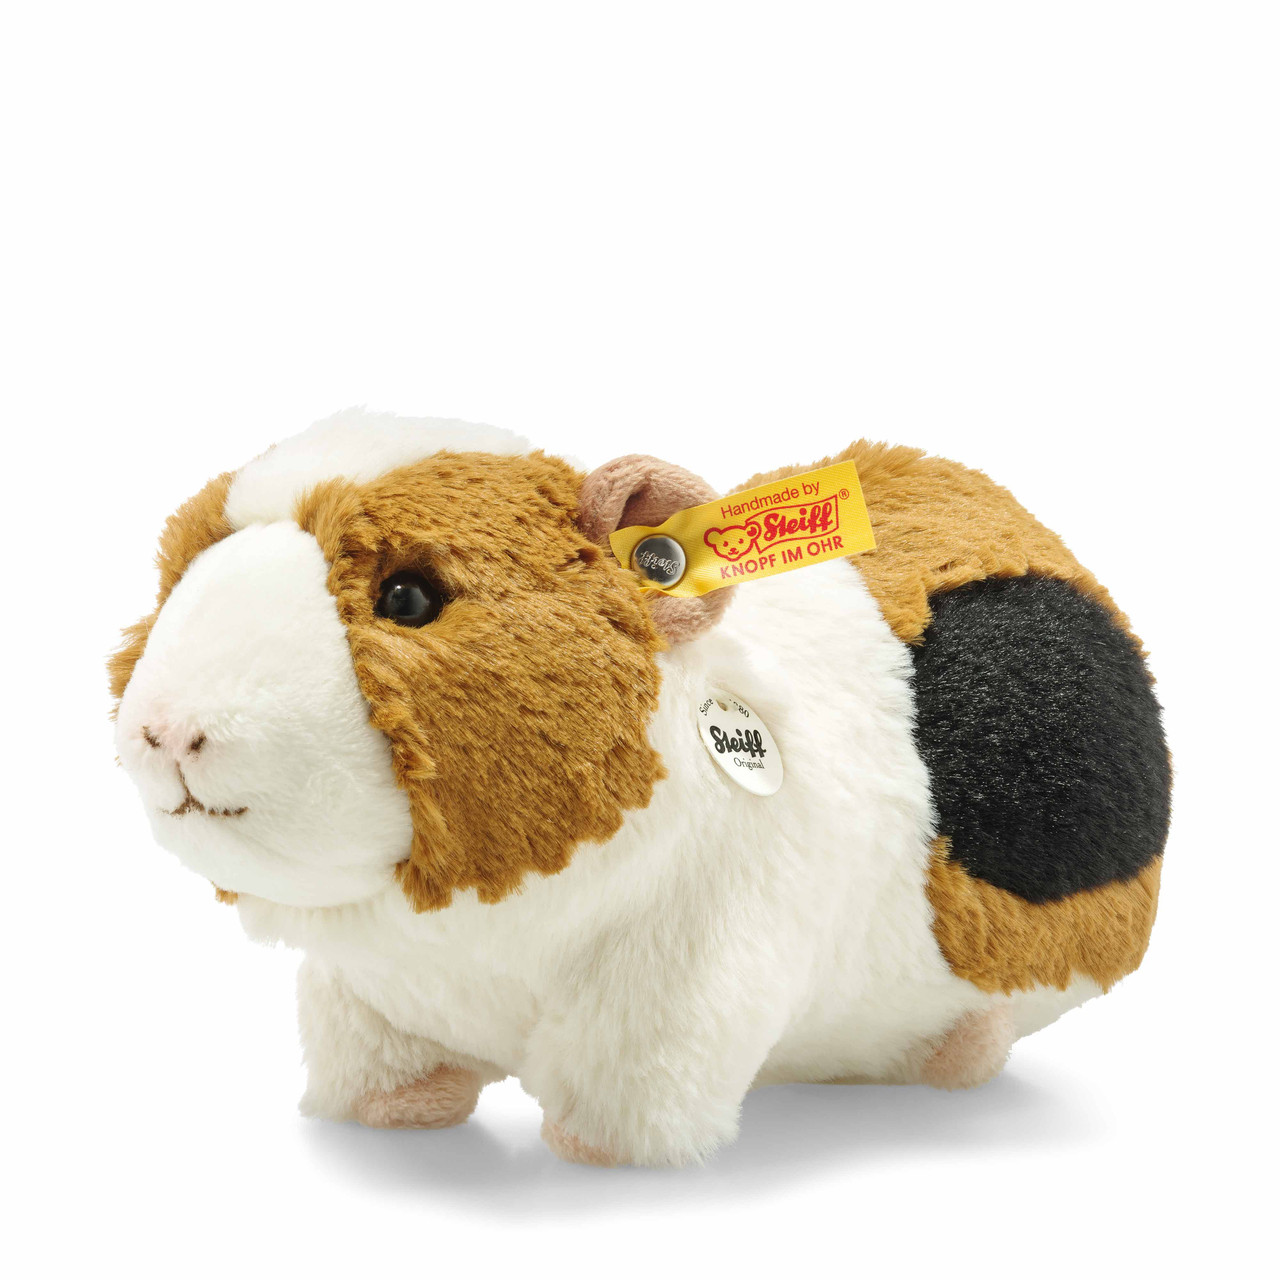 stuffed guinea pig